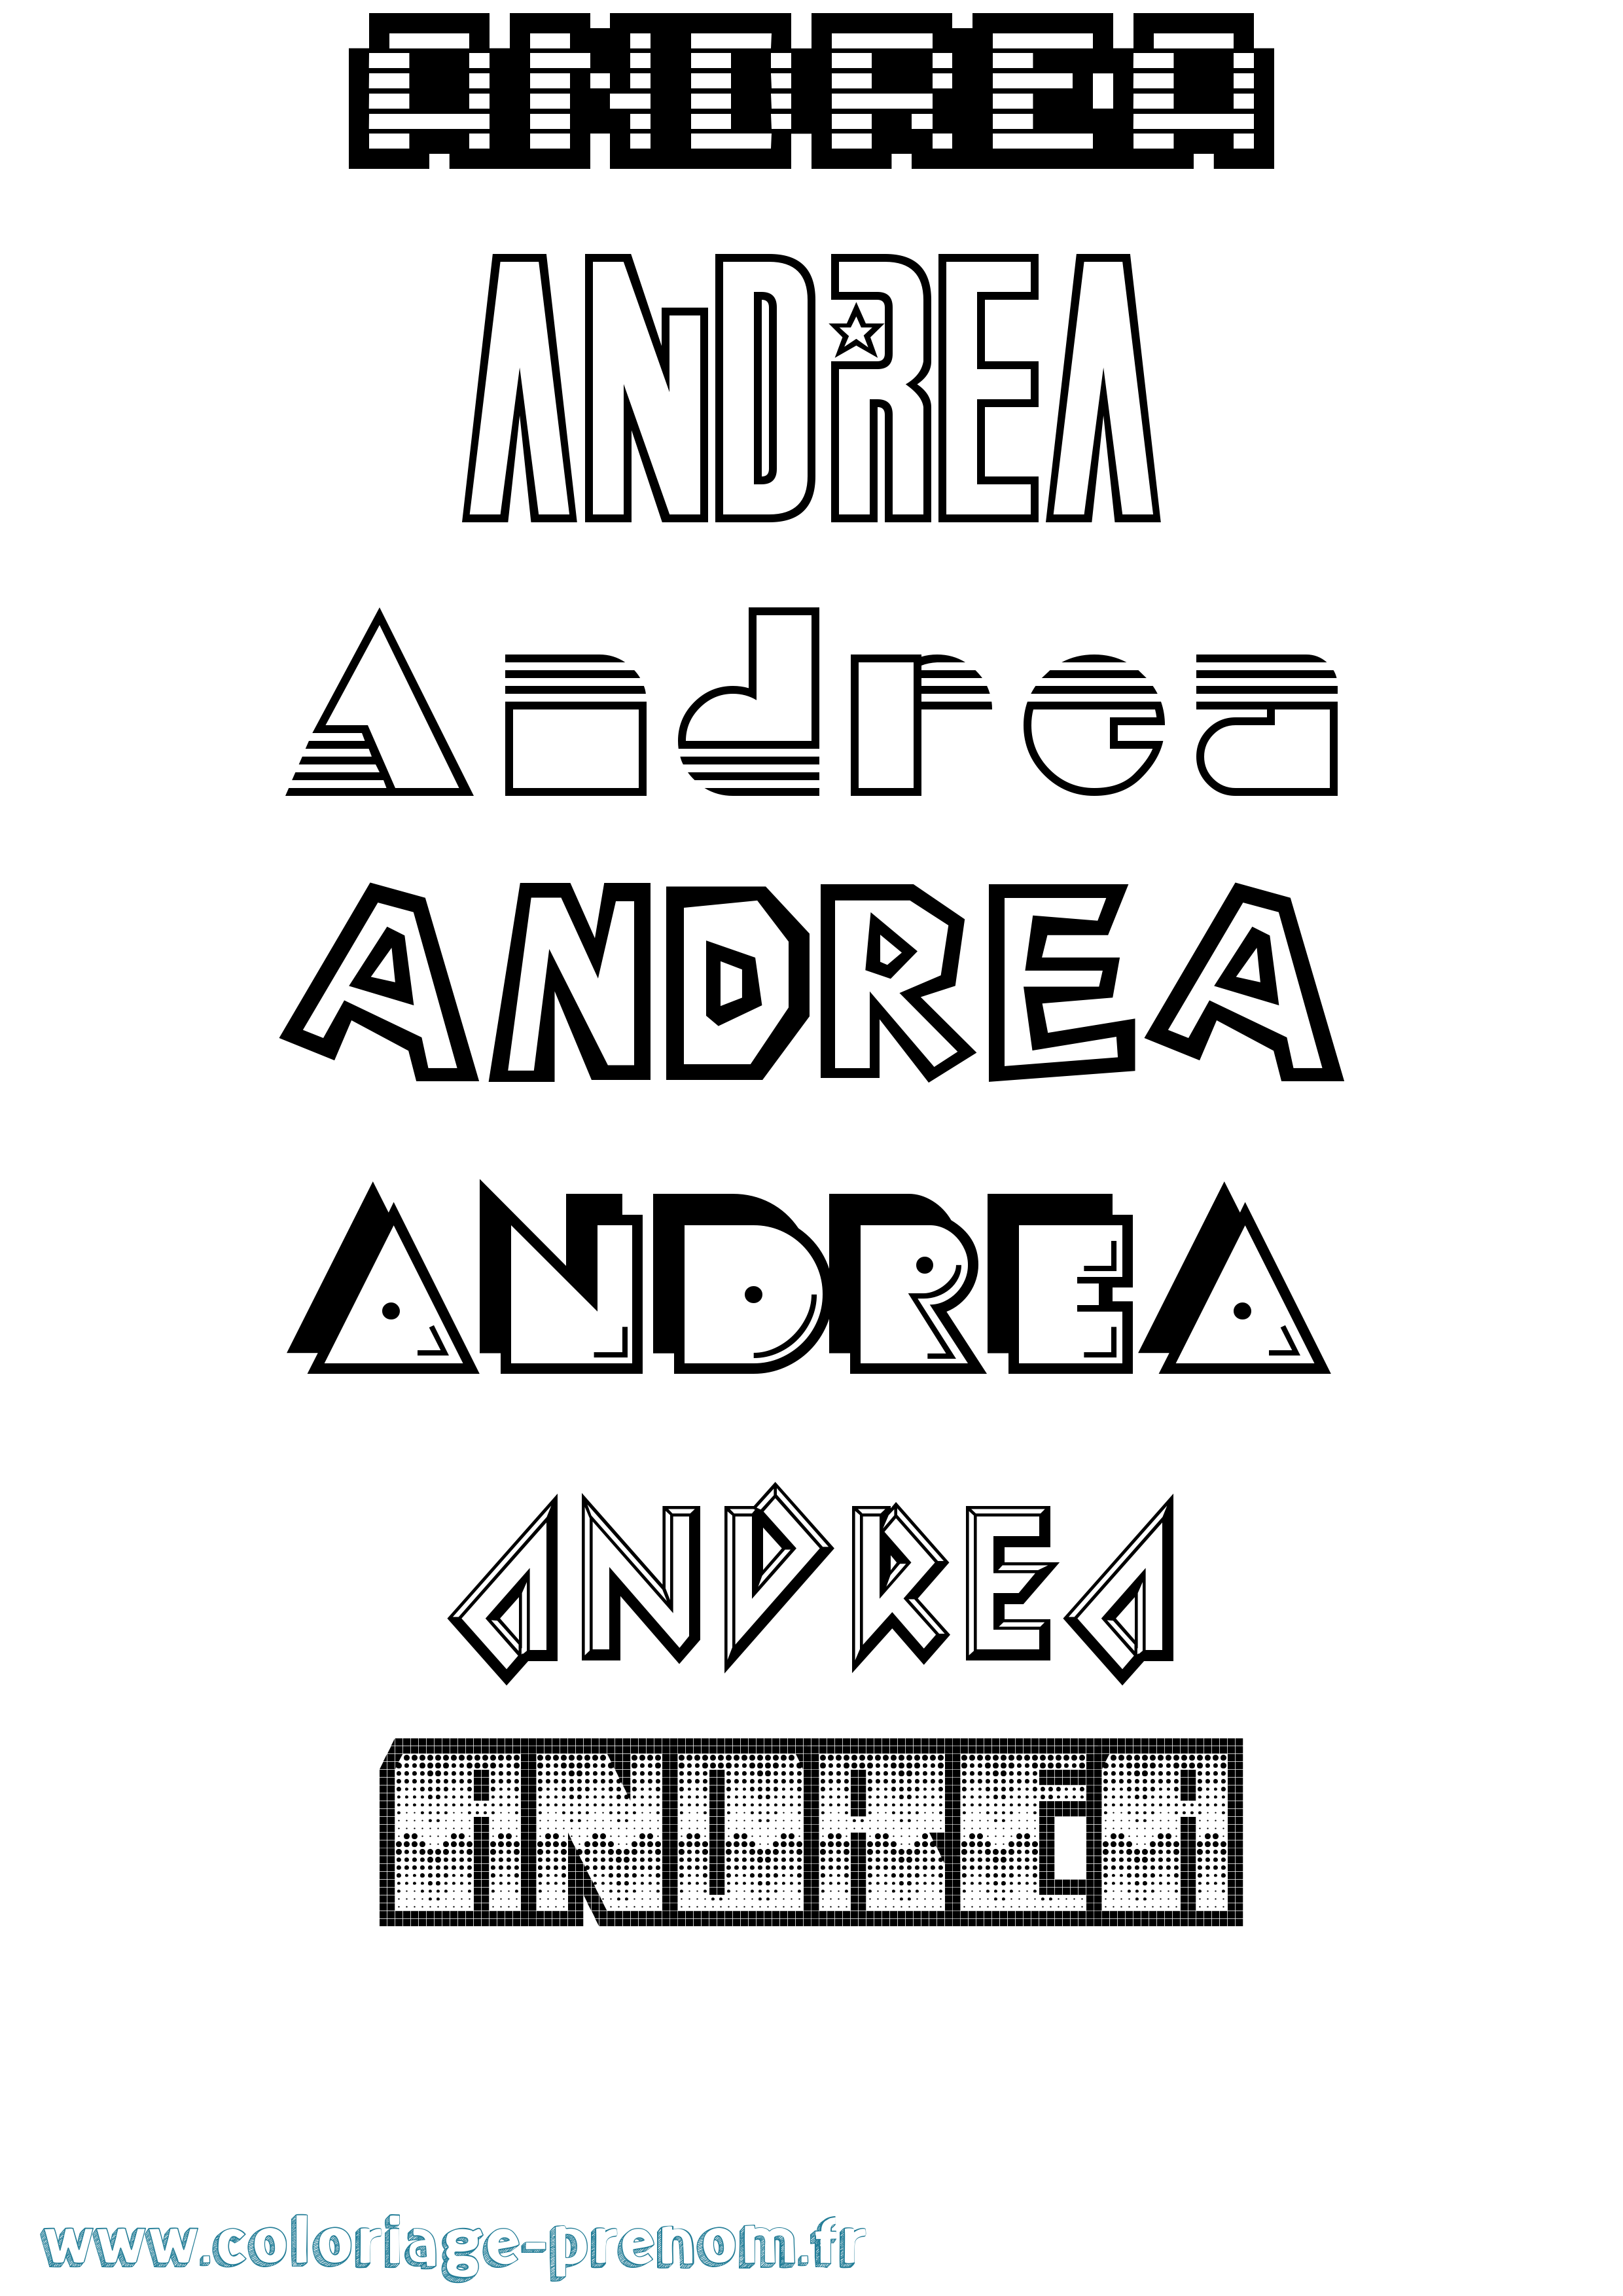 Coloriage prénom Andrea